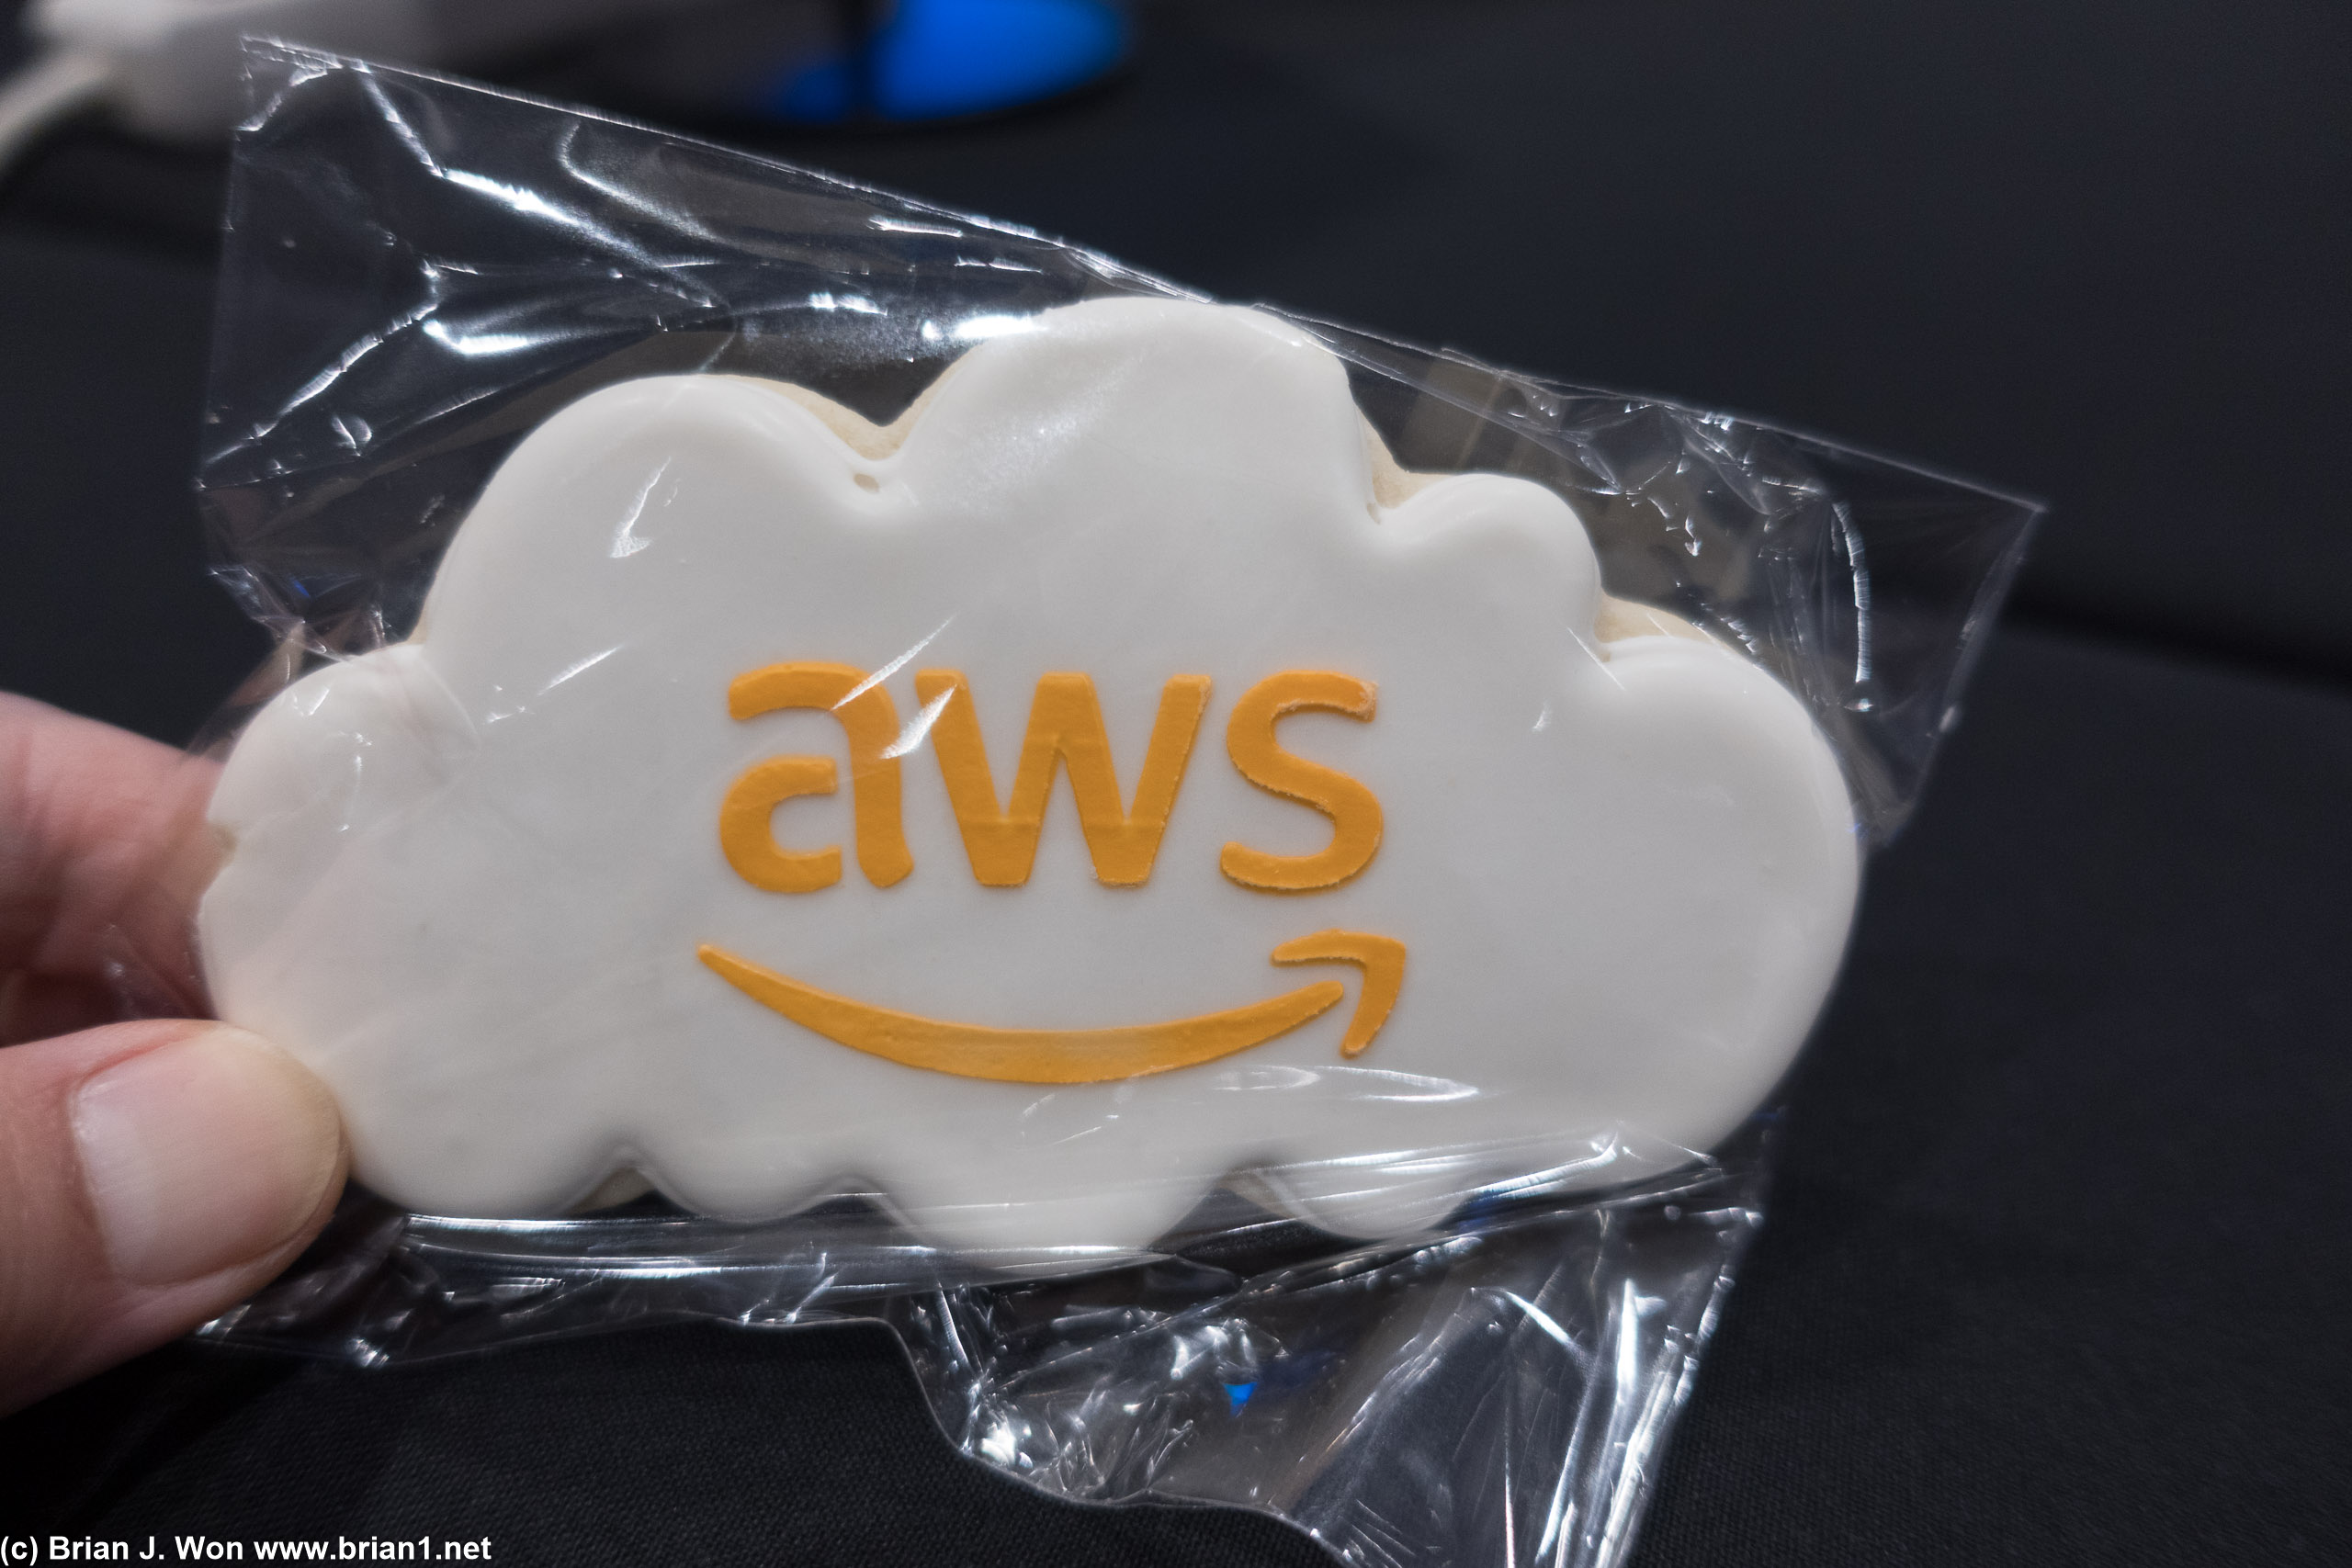 Amazon AWS provided shortbread cookies.